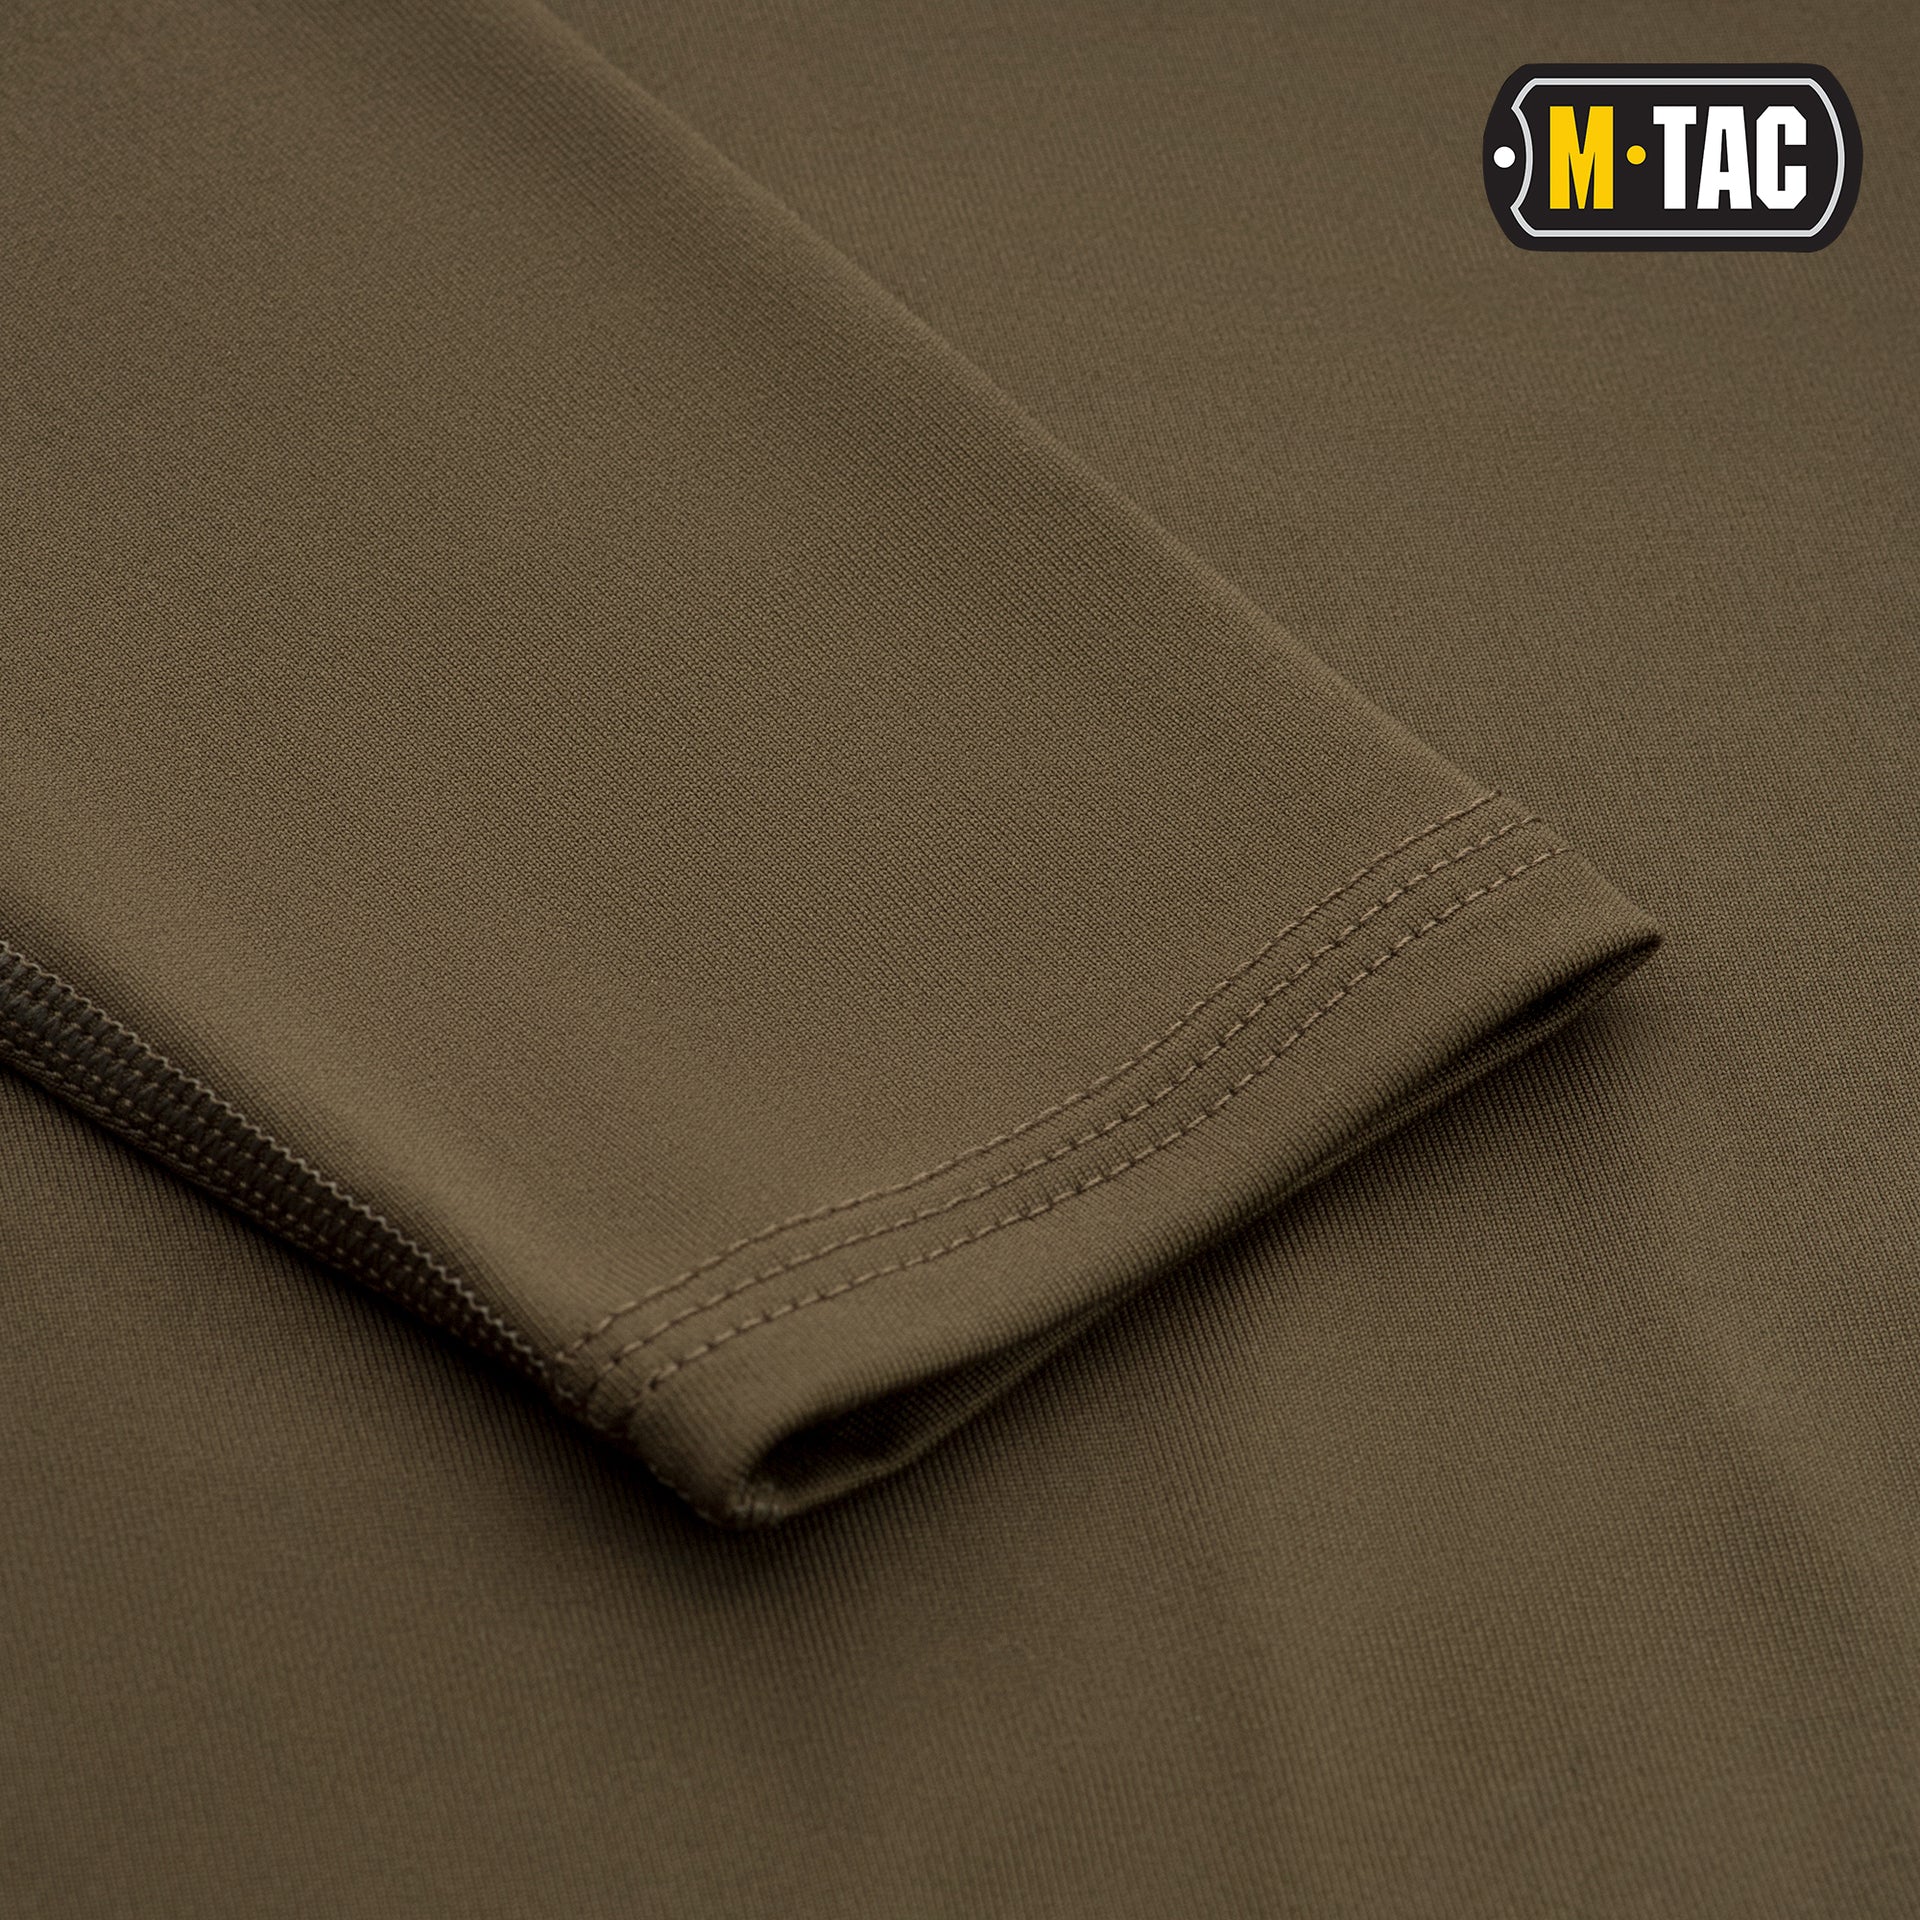 M-Tac Thermal Underwear Set Thermoline